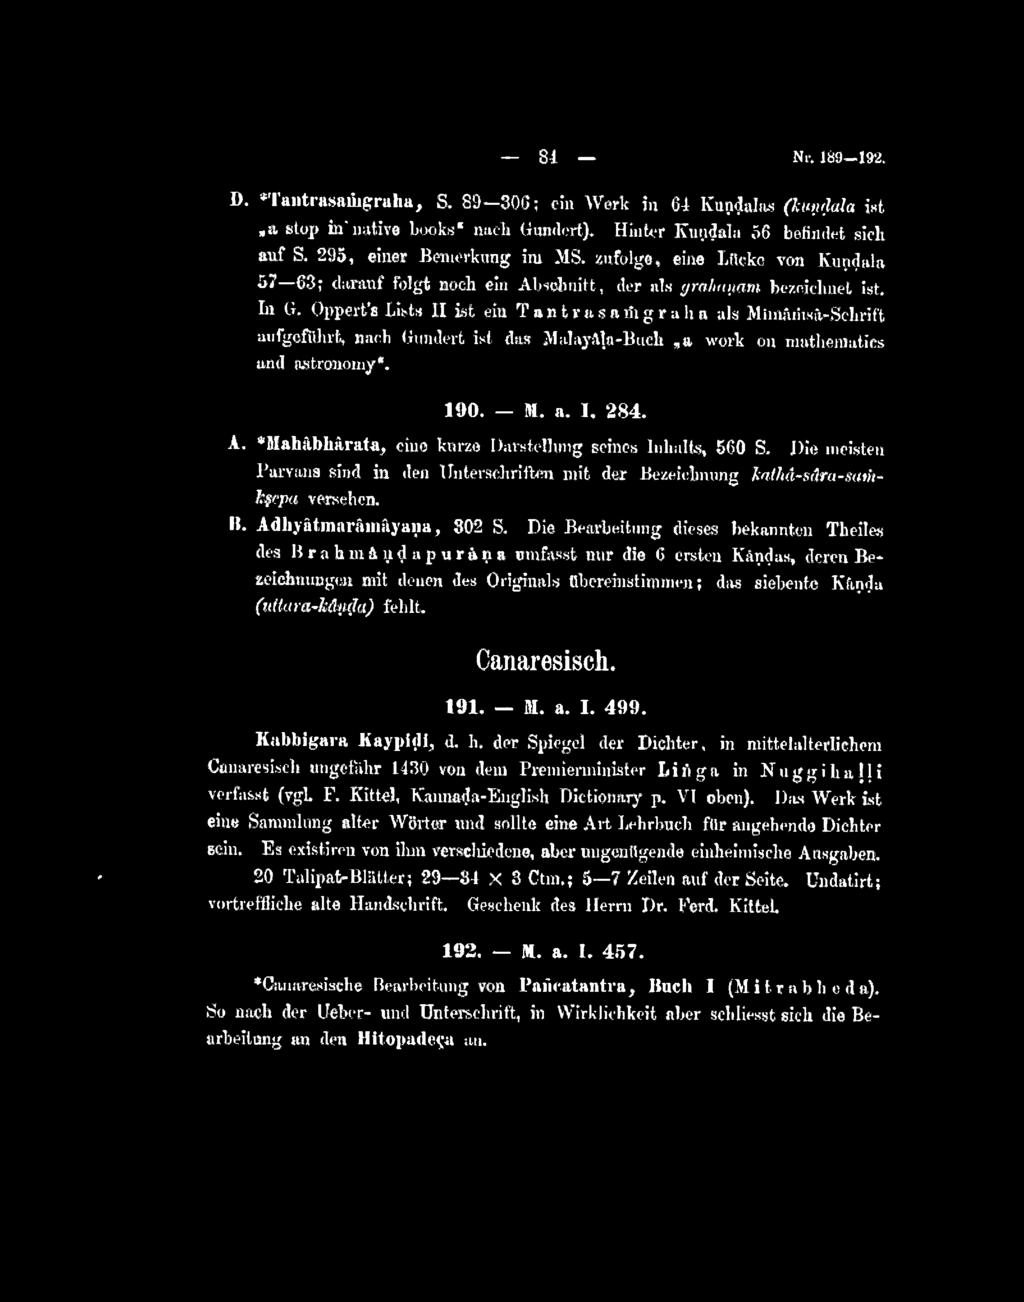 ^ln t, lun-h Uuudeii ist da» Malnyila-Buck,a work on mathematies and Rätrouom)' m. - M. «. I. 284. A. *]Iahftb]iftratay eine kurze Damtelhing seines Inbults, 560 S.